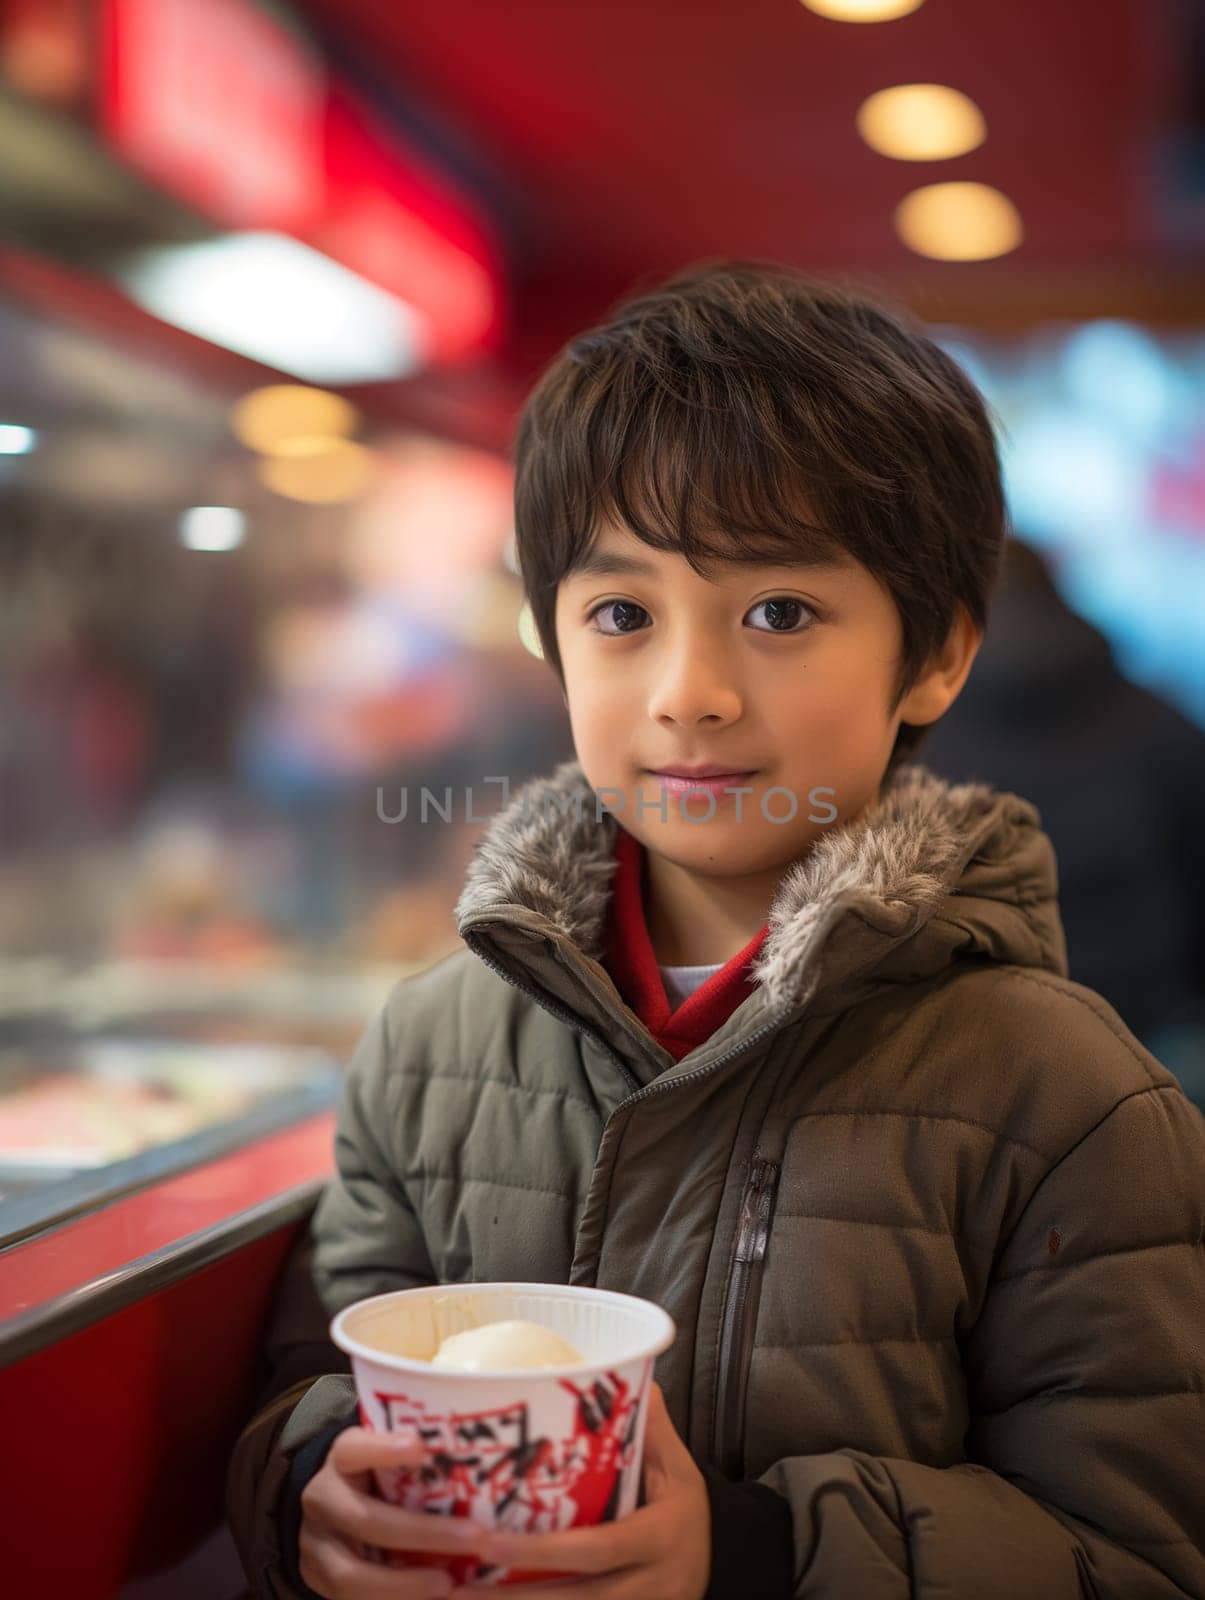 A joyful child smiles beside a large soft serve ice cream.